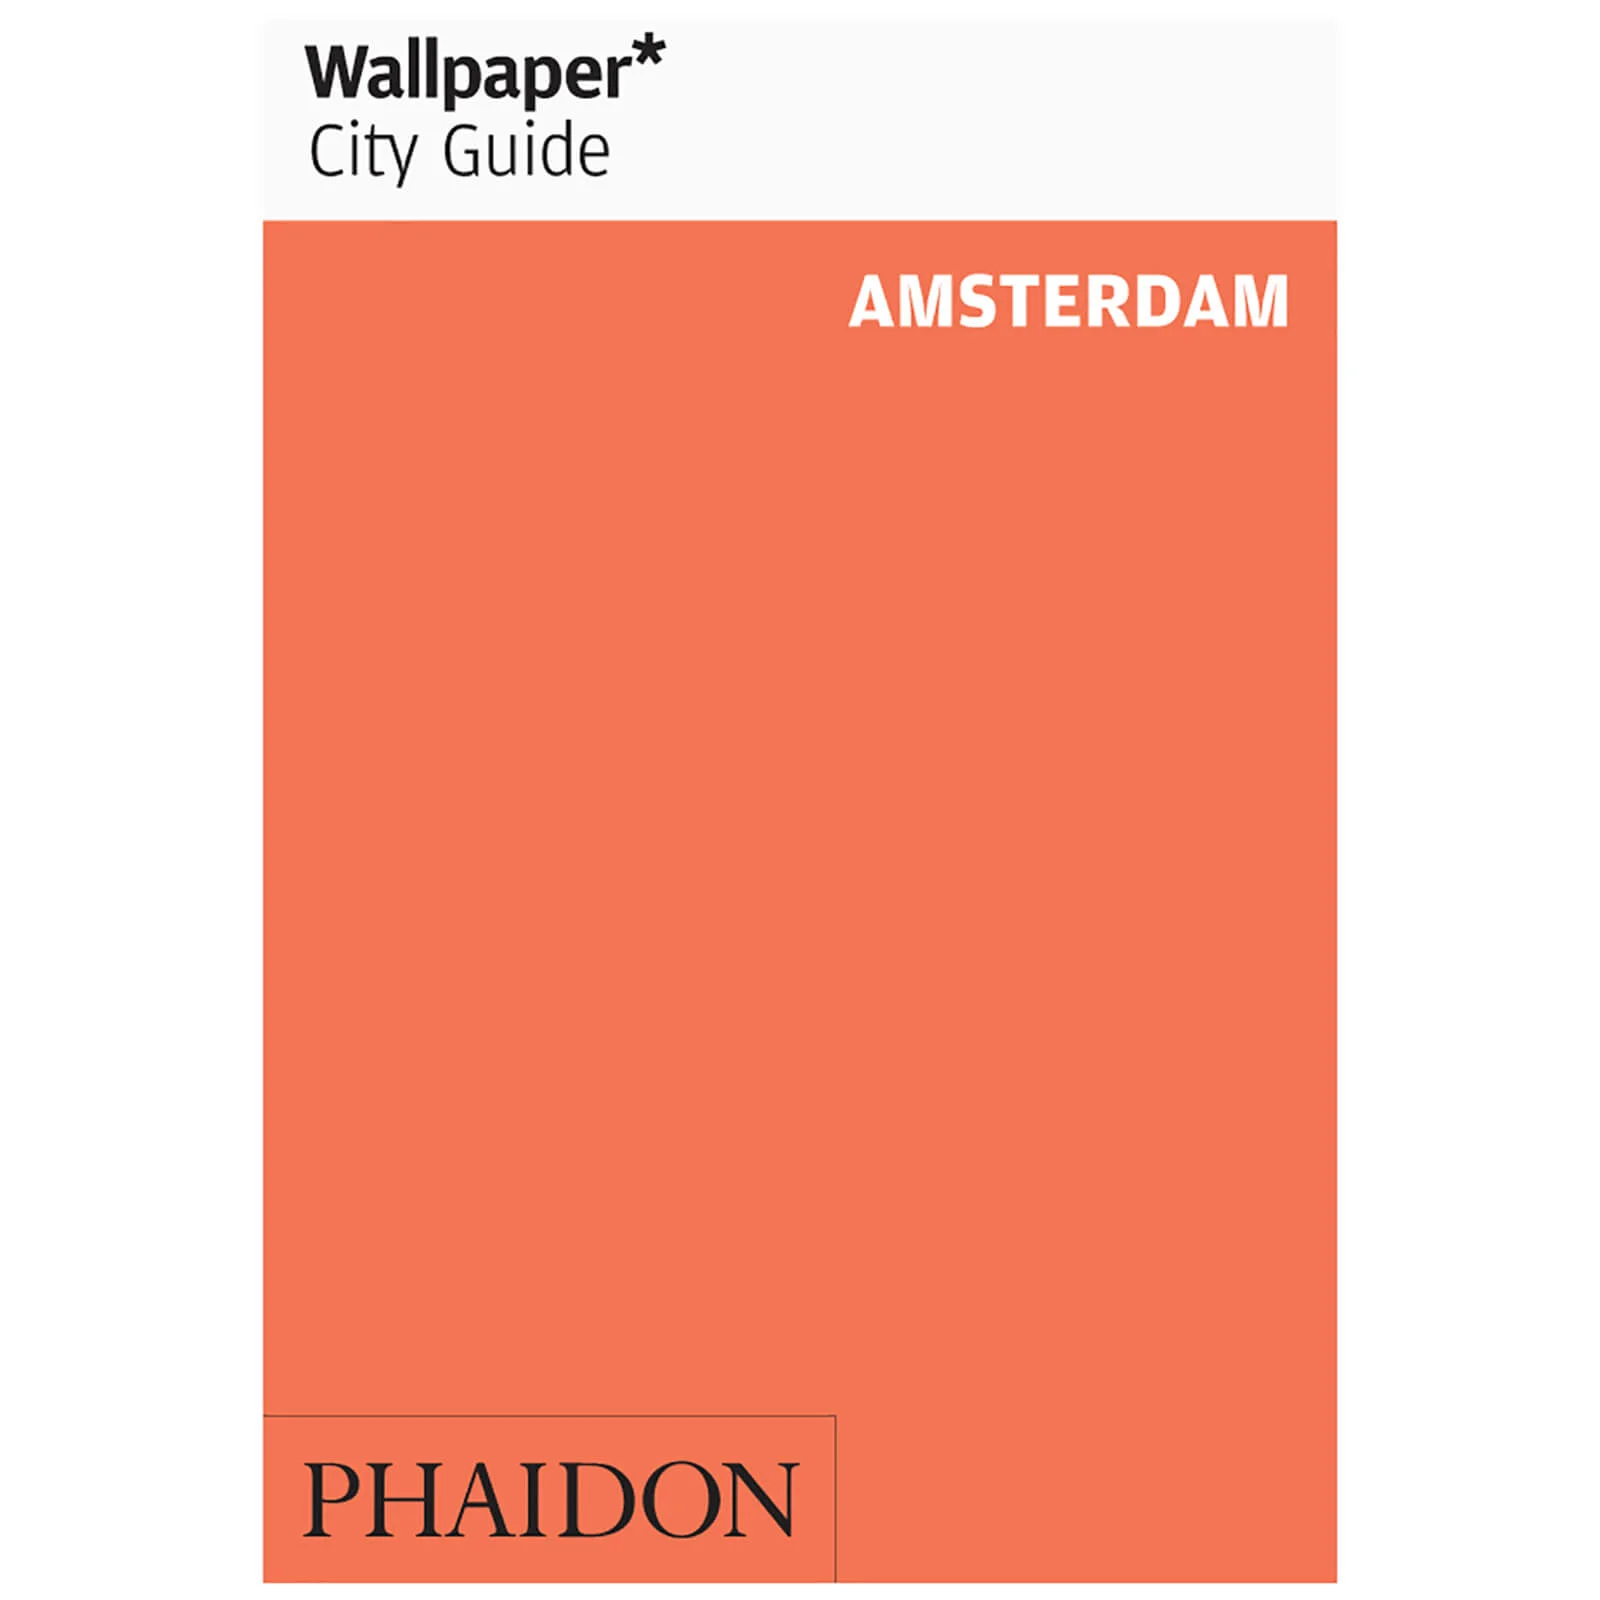 Phaidon: Wallpaper* City Guide - Amsterdam Image 1